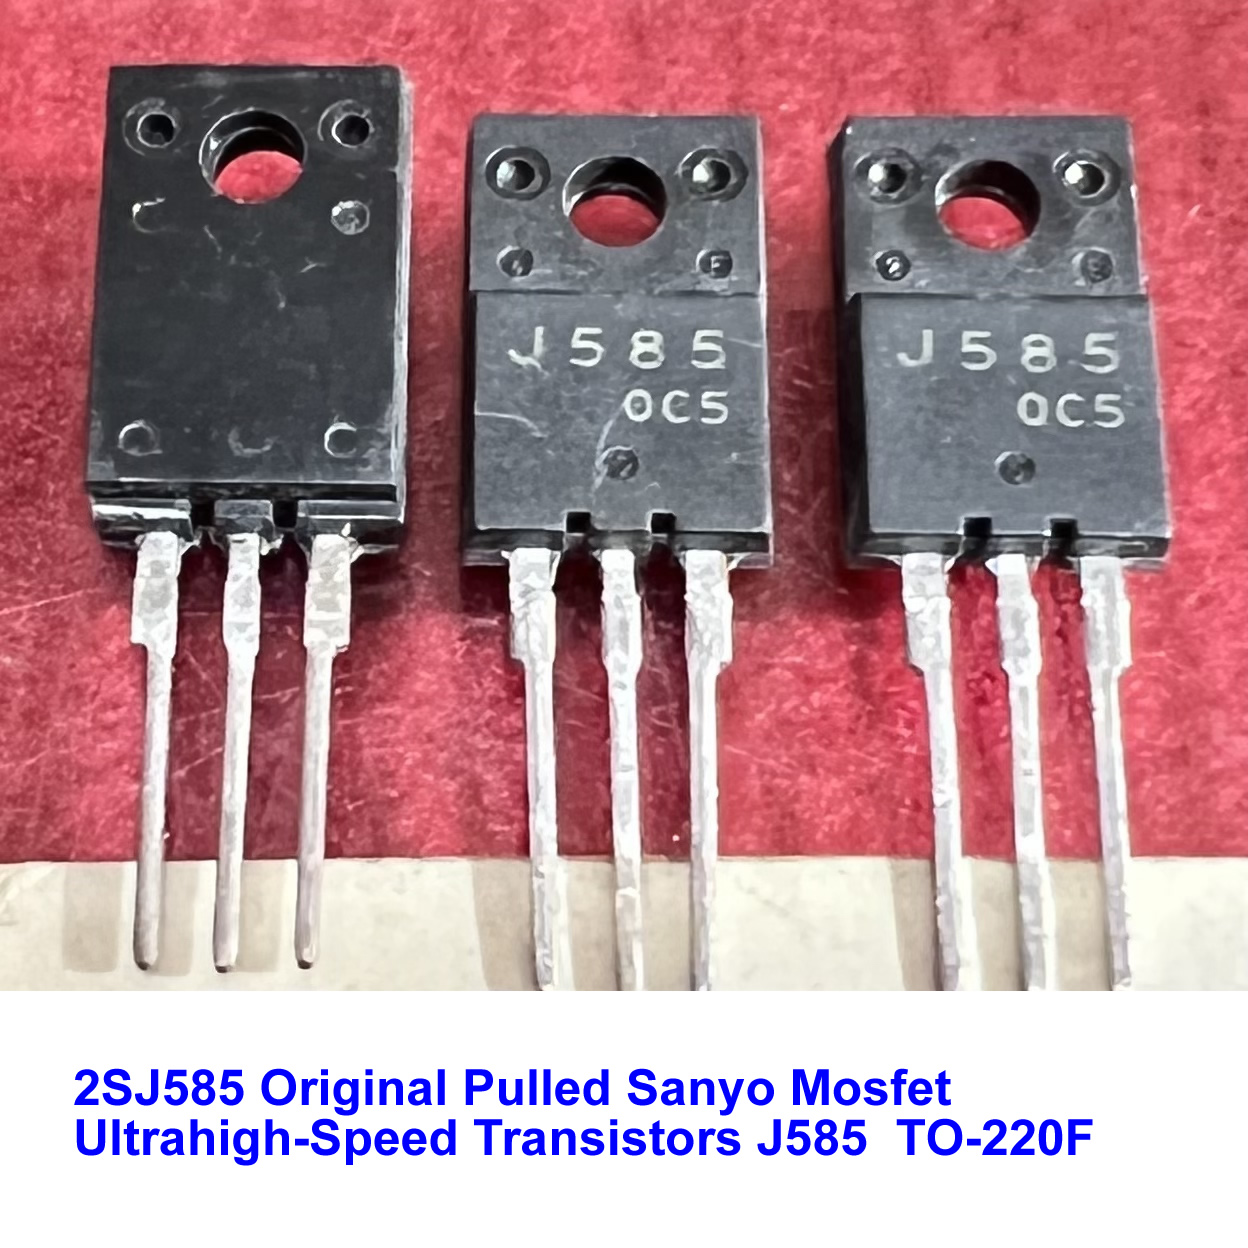 2SJ585 Original Pulled Sanyo Mosfet Ultrahigh-Speed Transistors